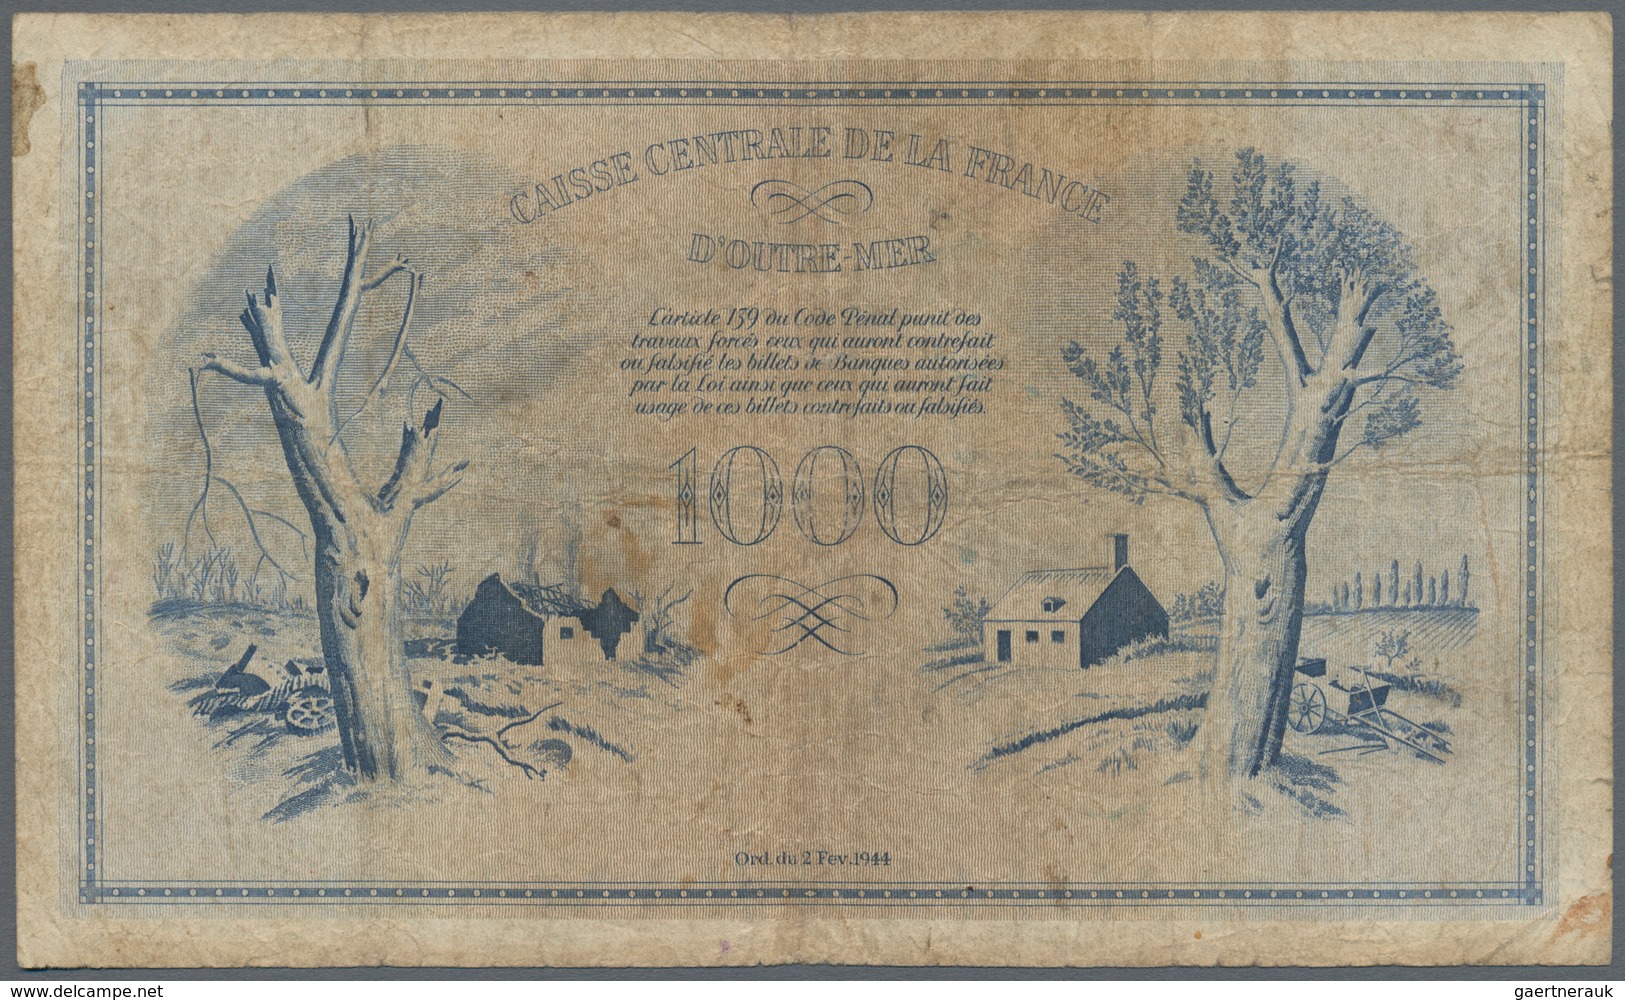 Guadeloupe: Caisse Centrale De La France D'Outre-Mer 1000 Francs 1944 With Watermark, P.30b, Extraor - Sonstige – Amerika